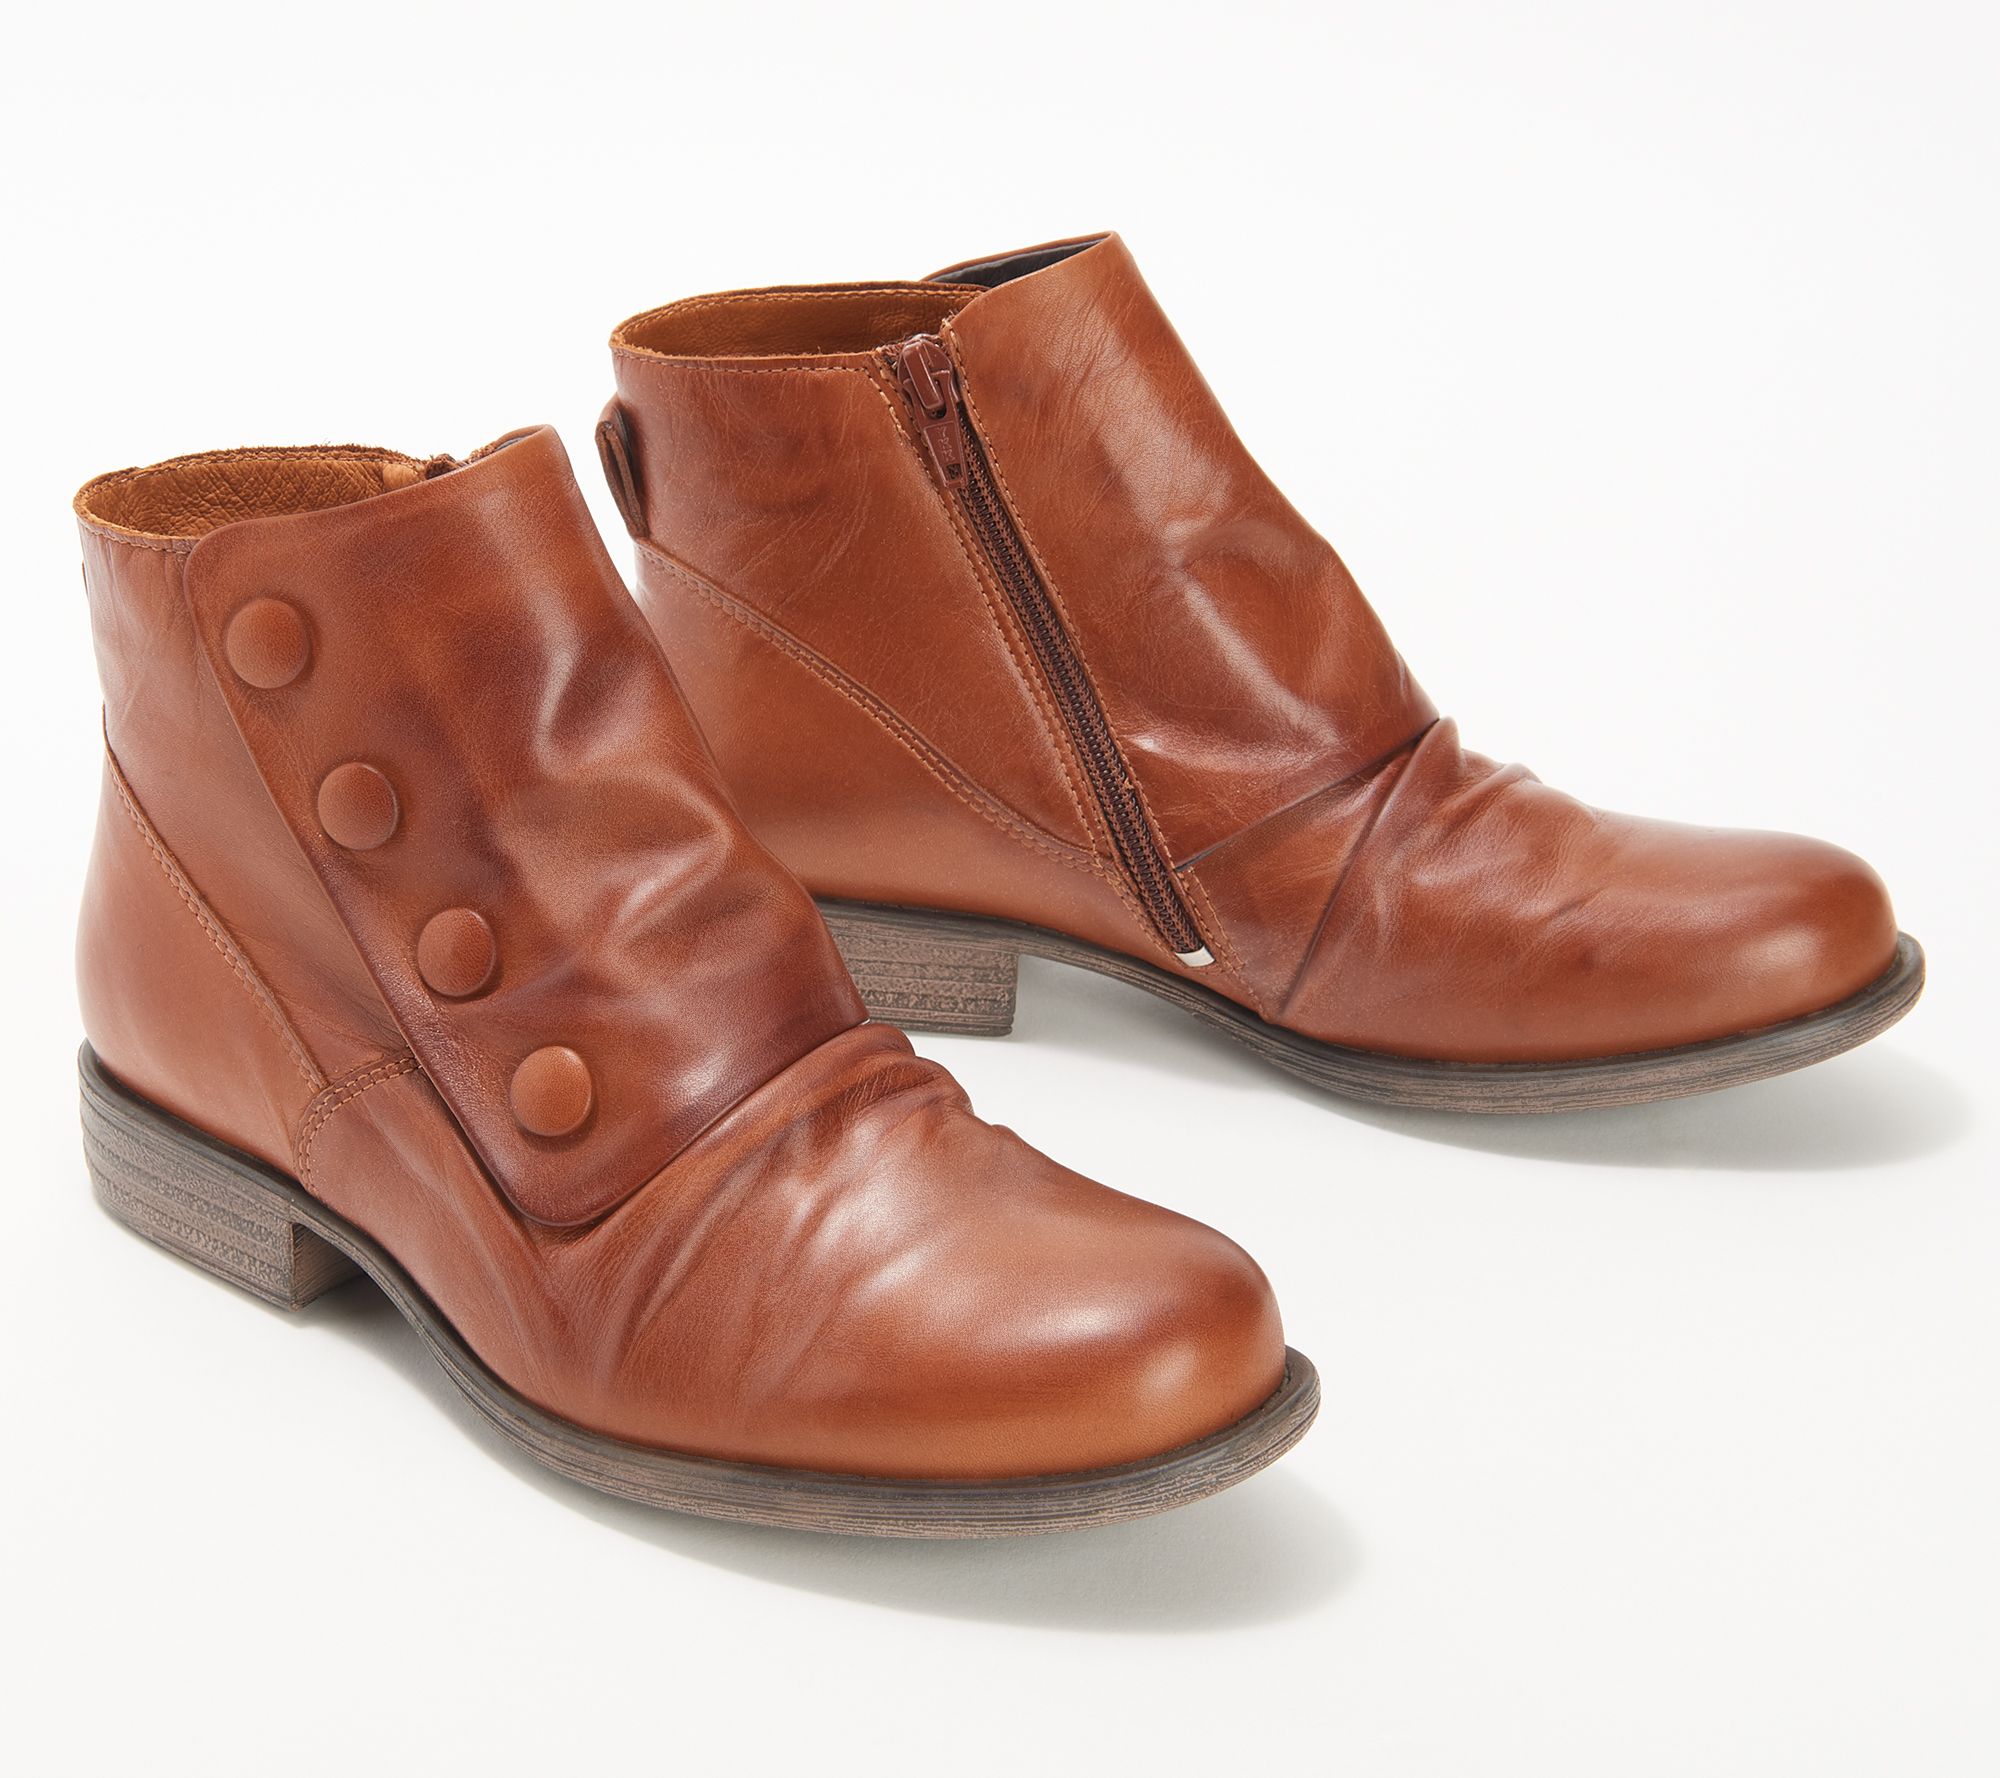 Miz Mooz Leather Upper Boots